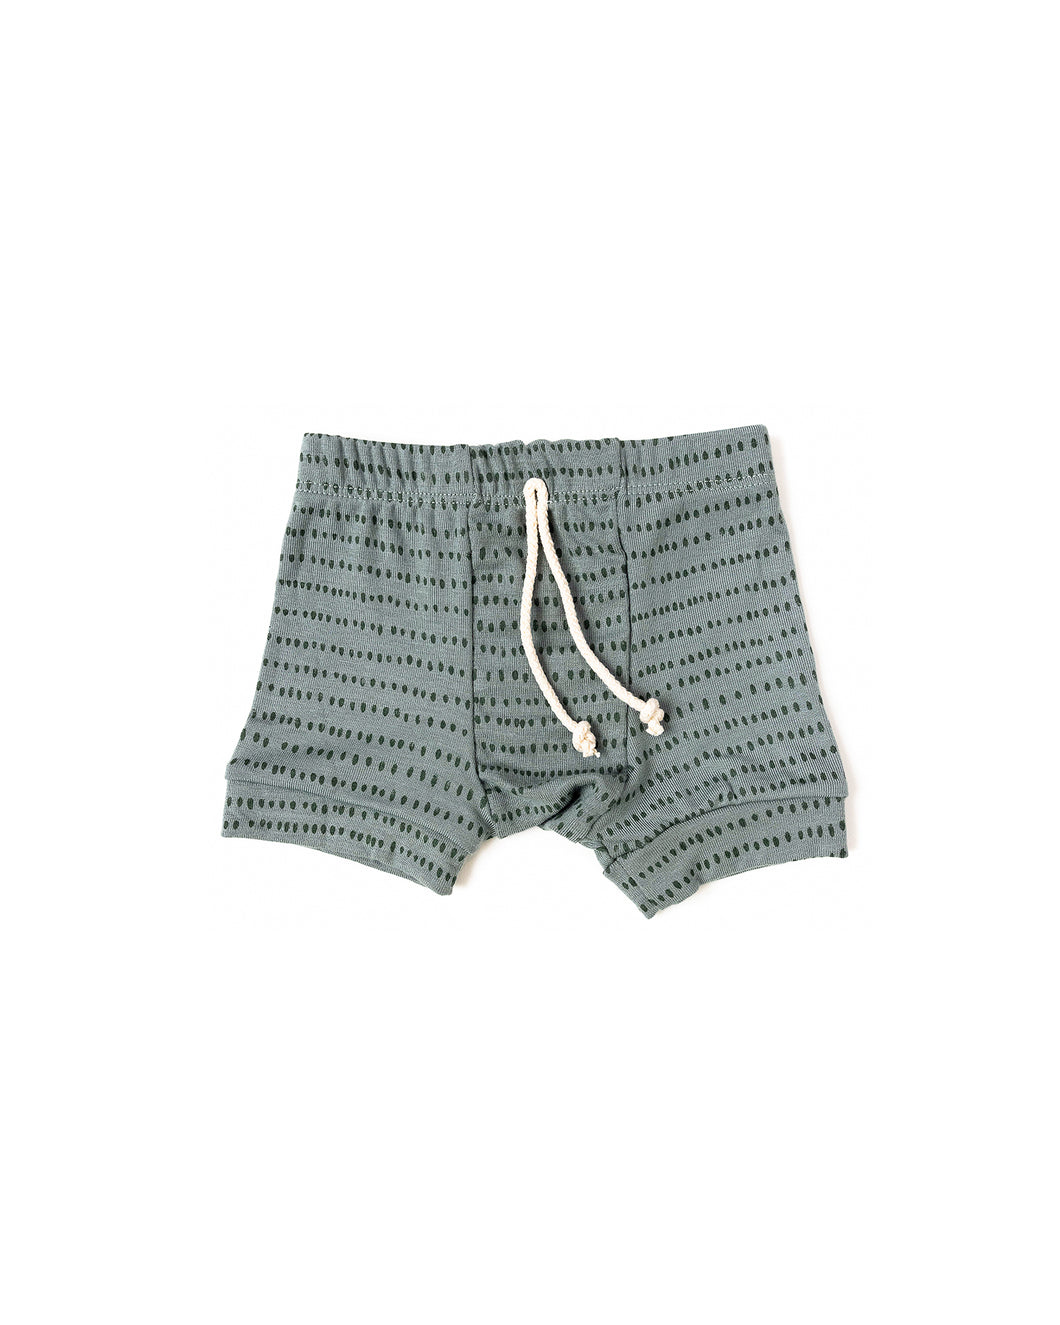 rib knit shorts - dash dot on sage